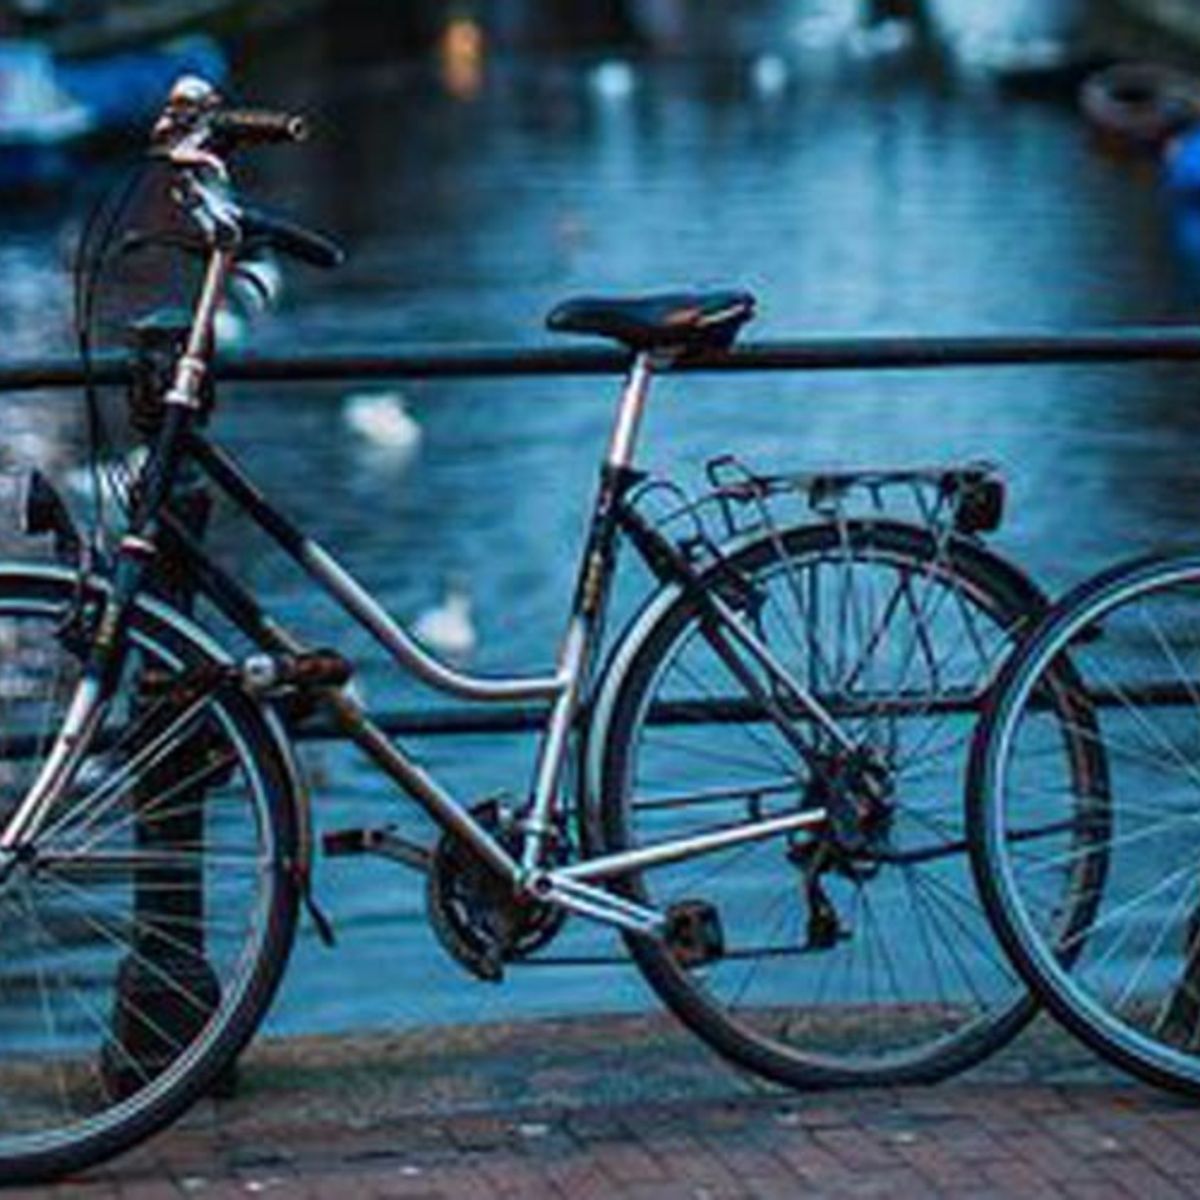 68 gedachtes die iedereen Amsterdam heeft fiets